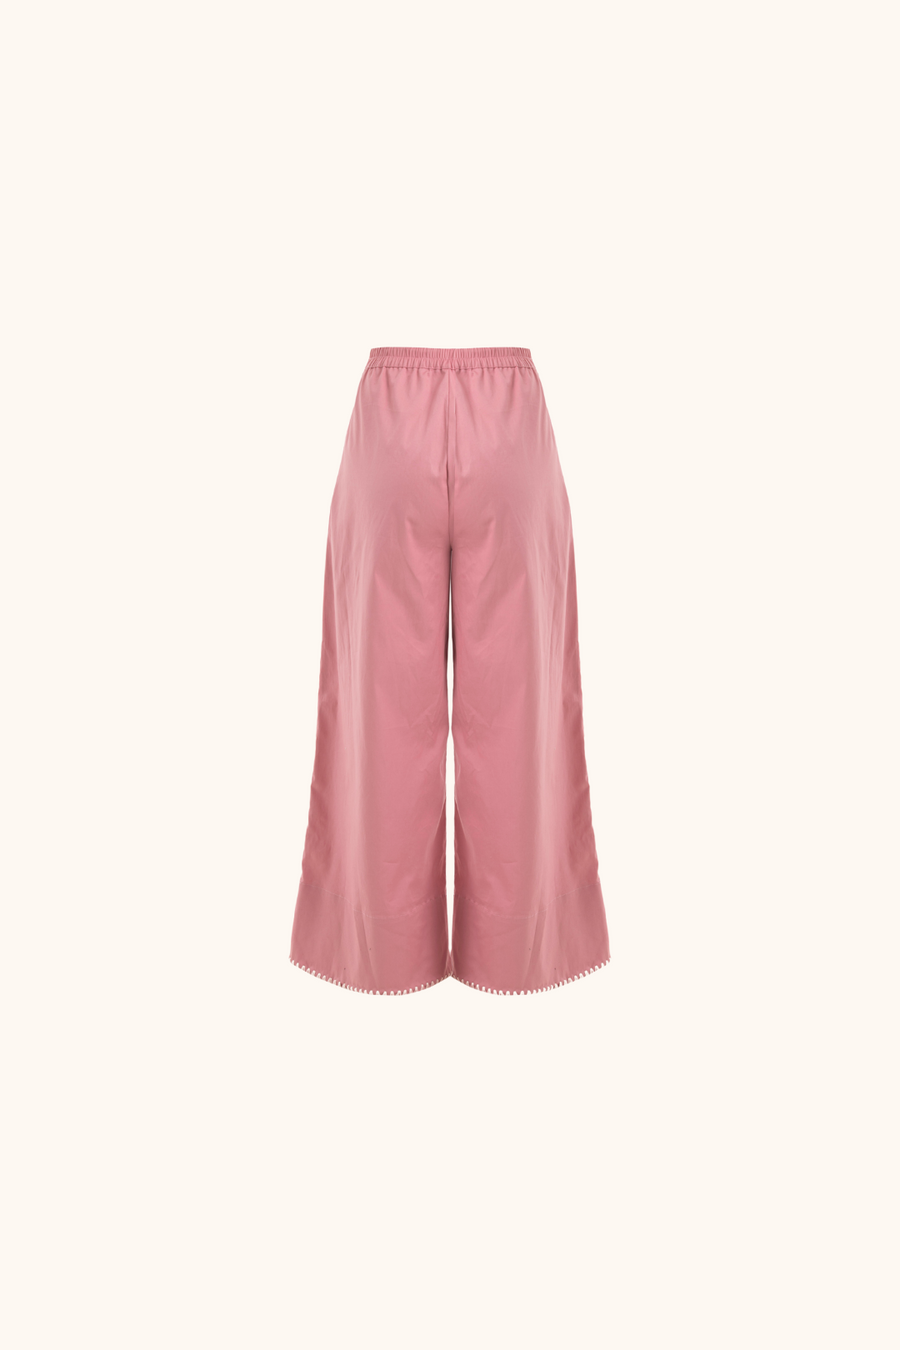 'Old Pink' Pants